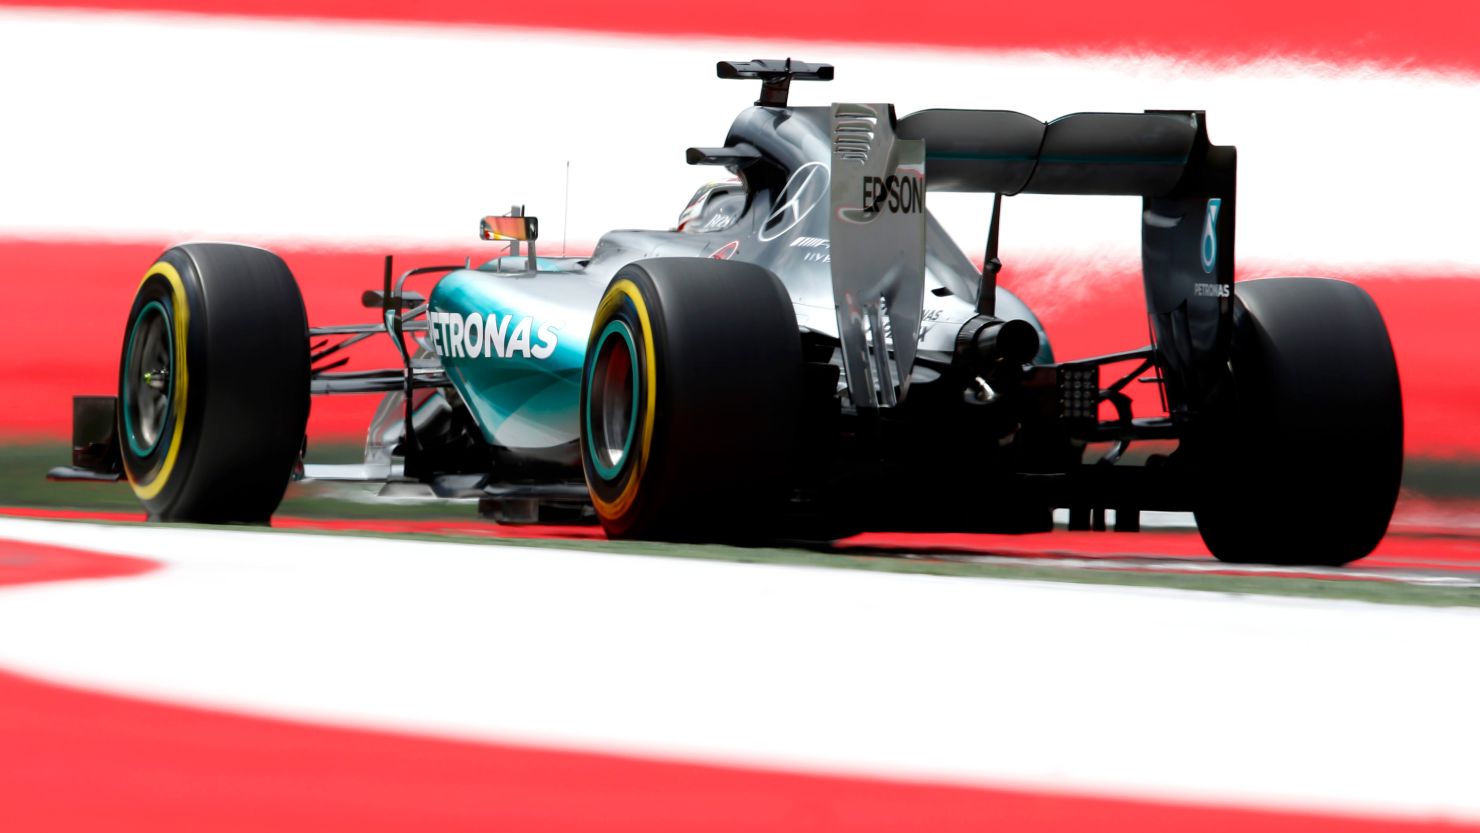 Lewis Hamilton claimed pole position at the 2015 Austrian Grand Prix.